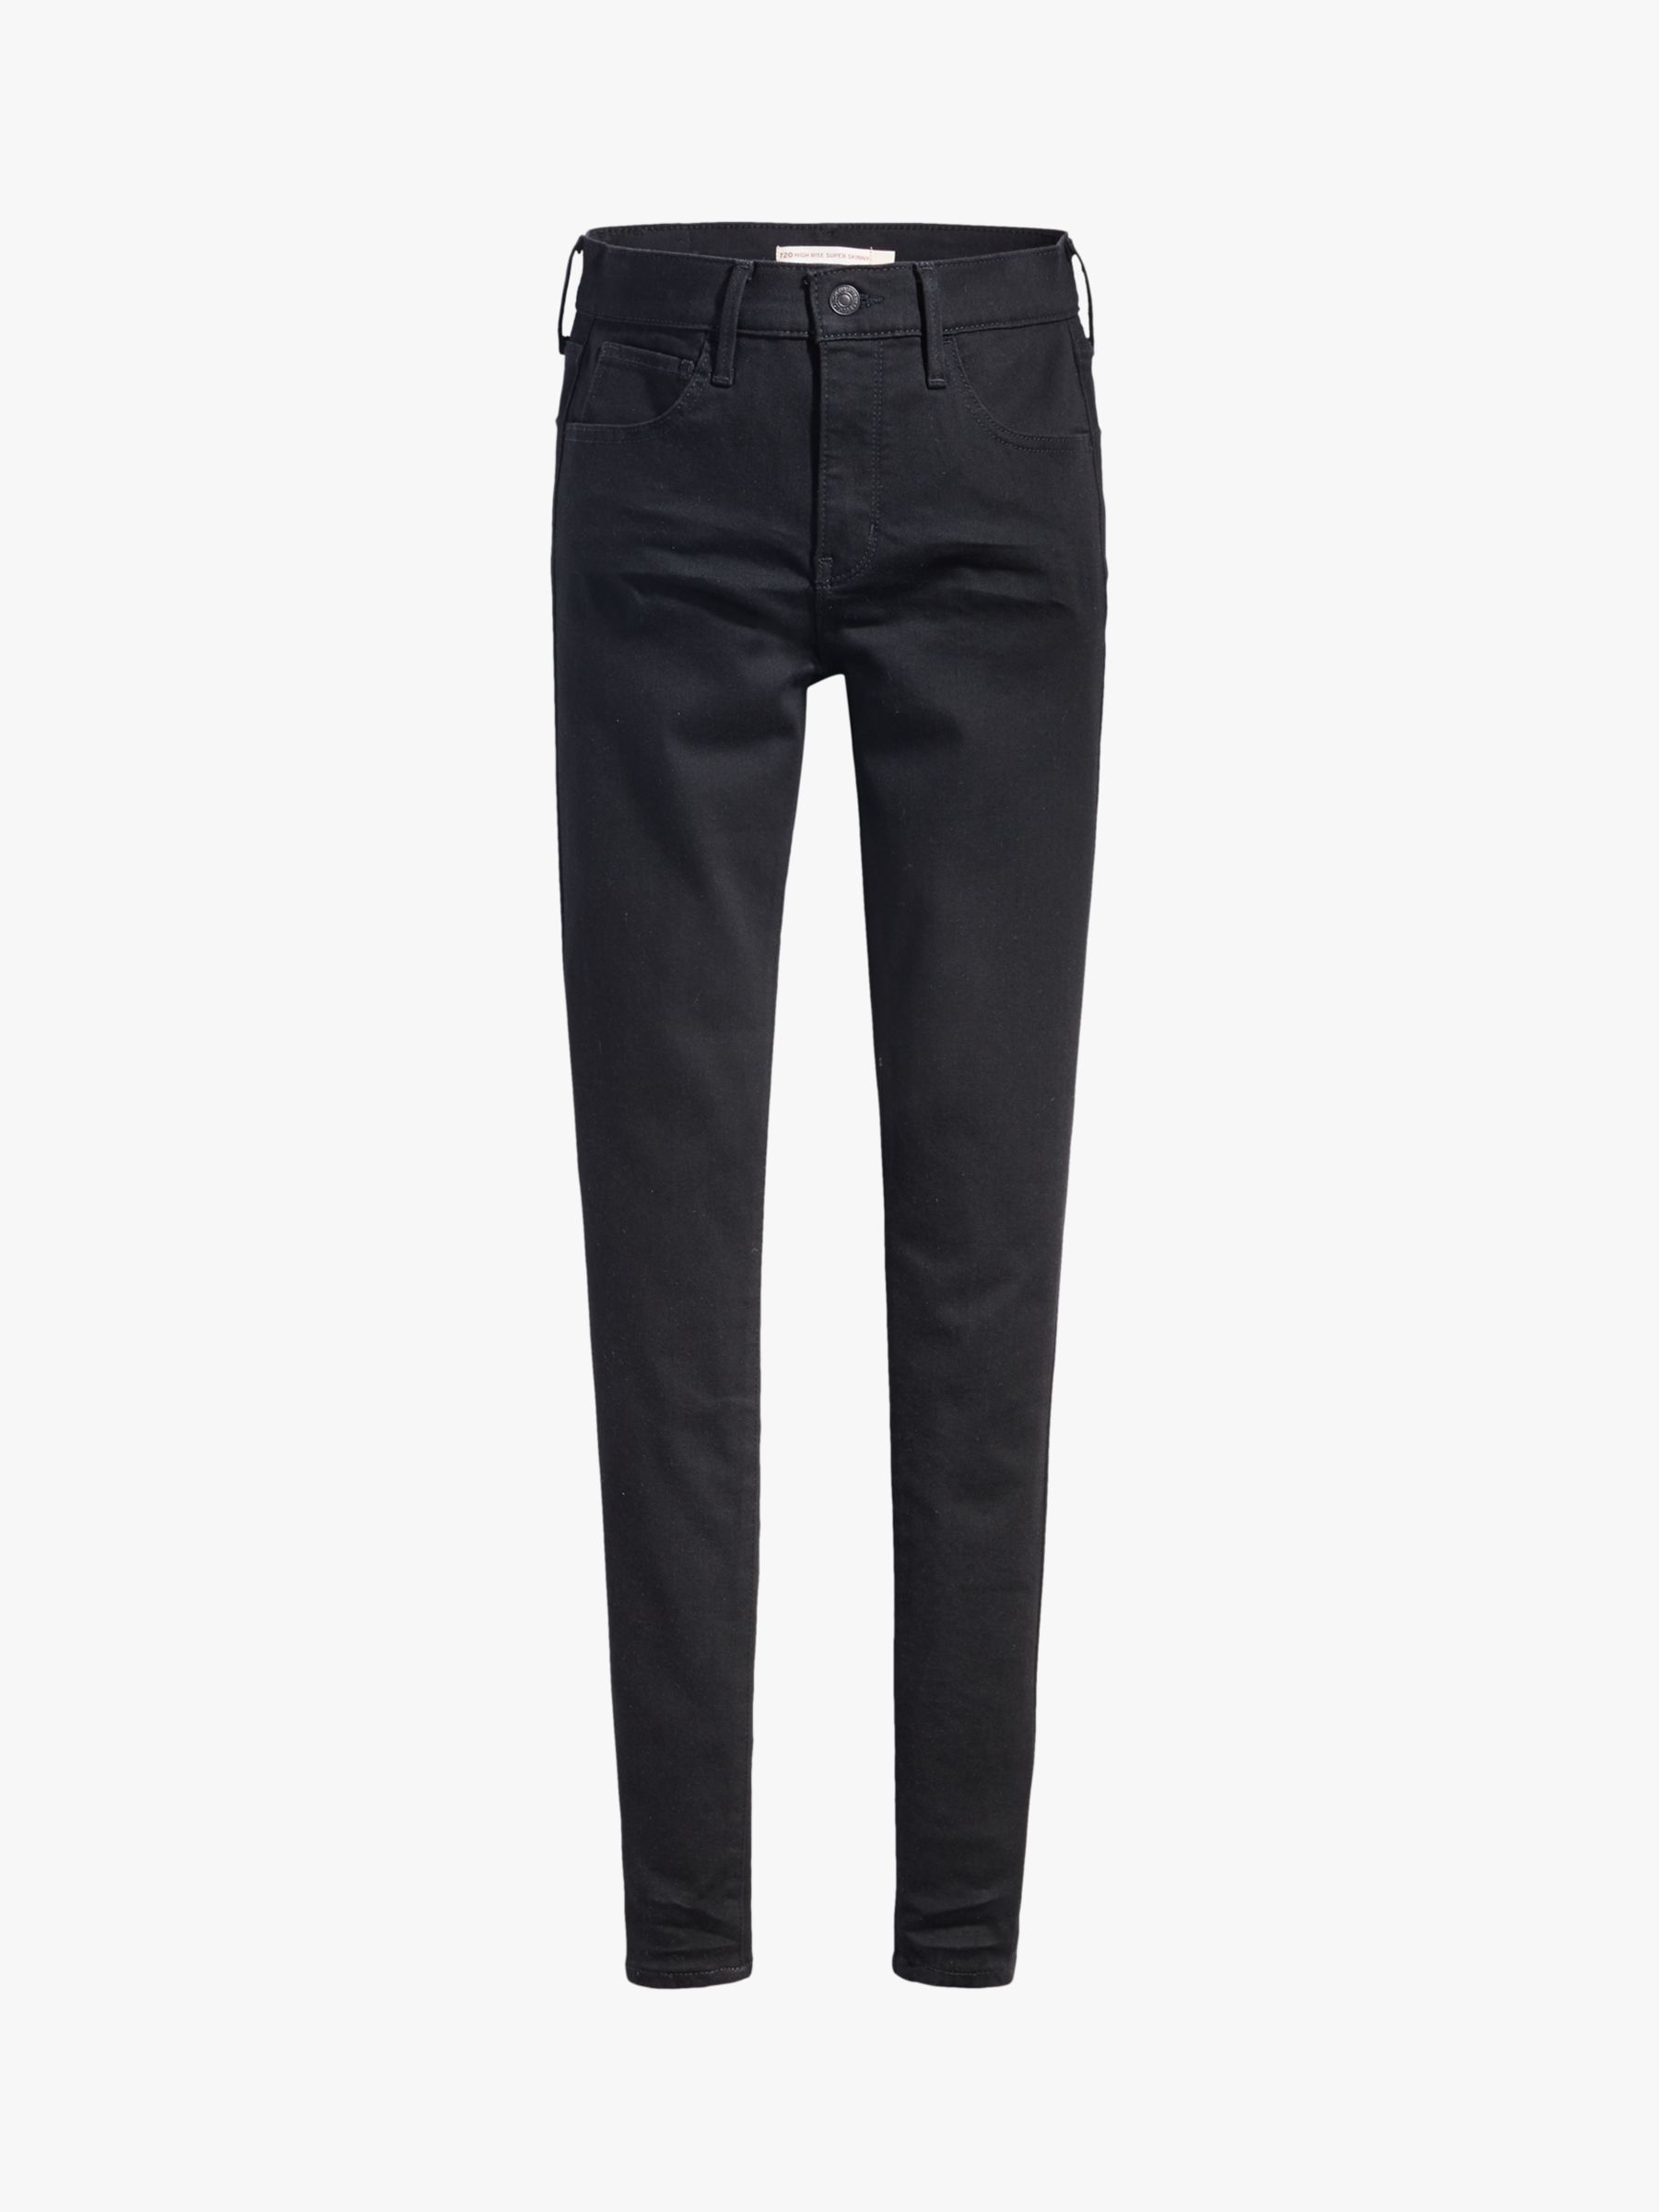 Levi's 720 High Rise Super Skinny Jeans, Black Cestial, W27/L34